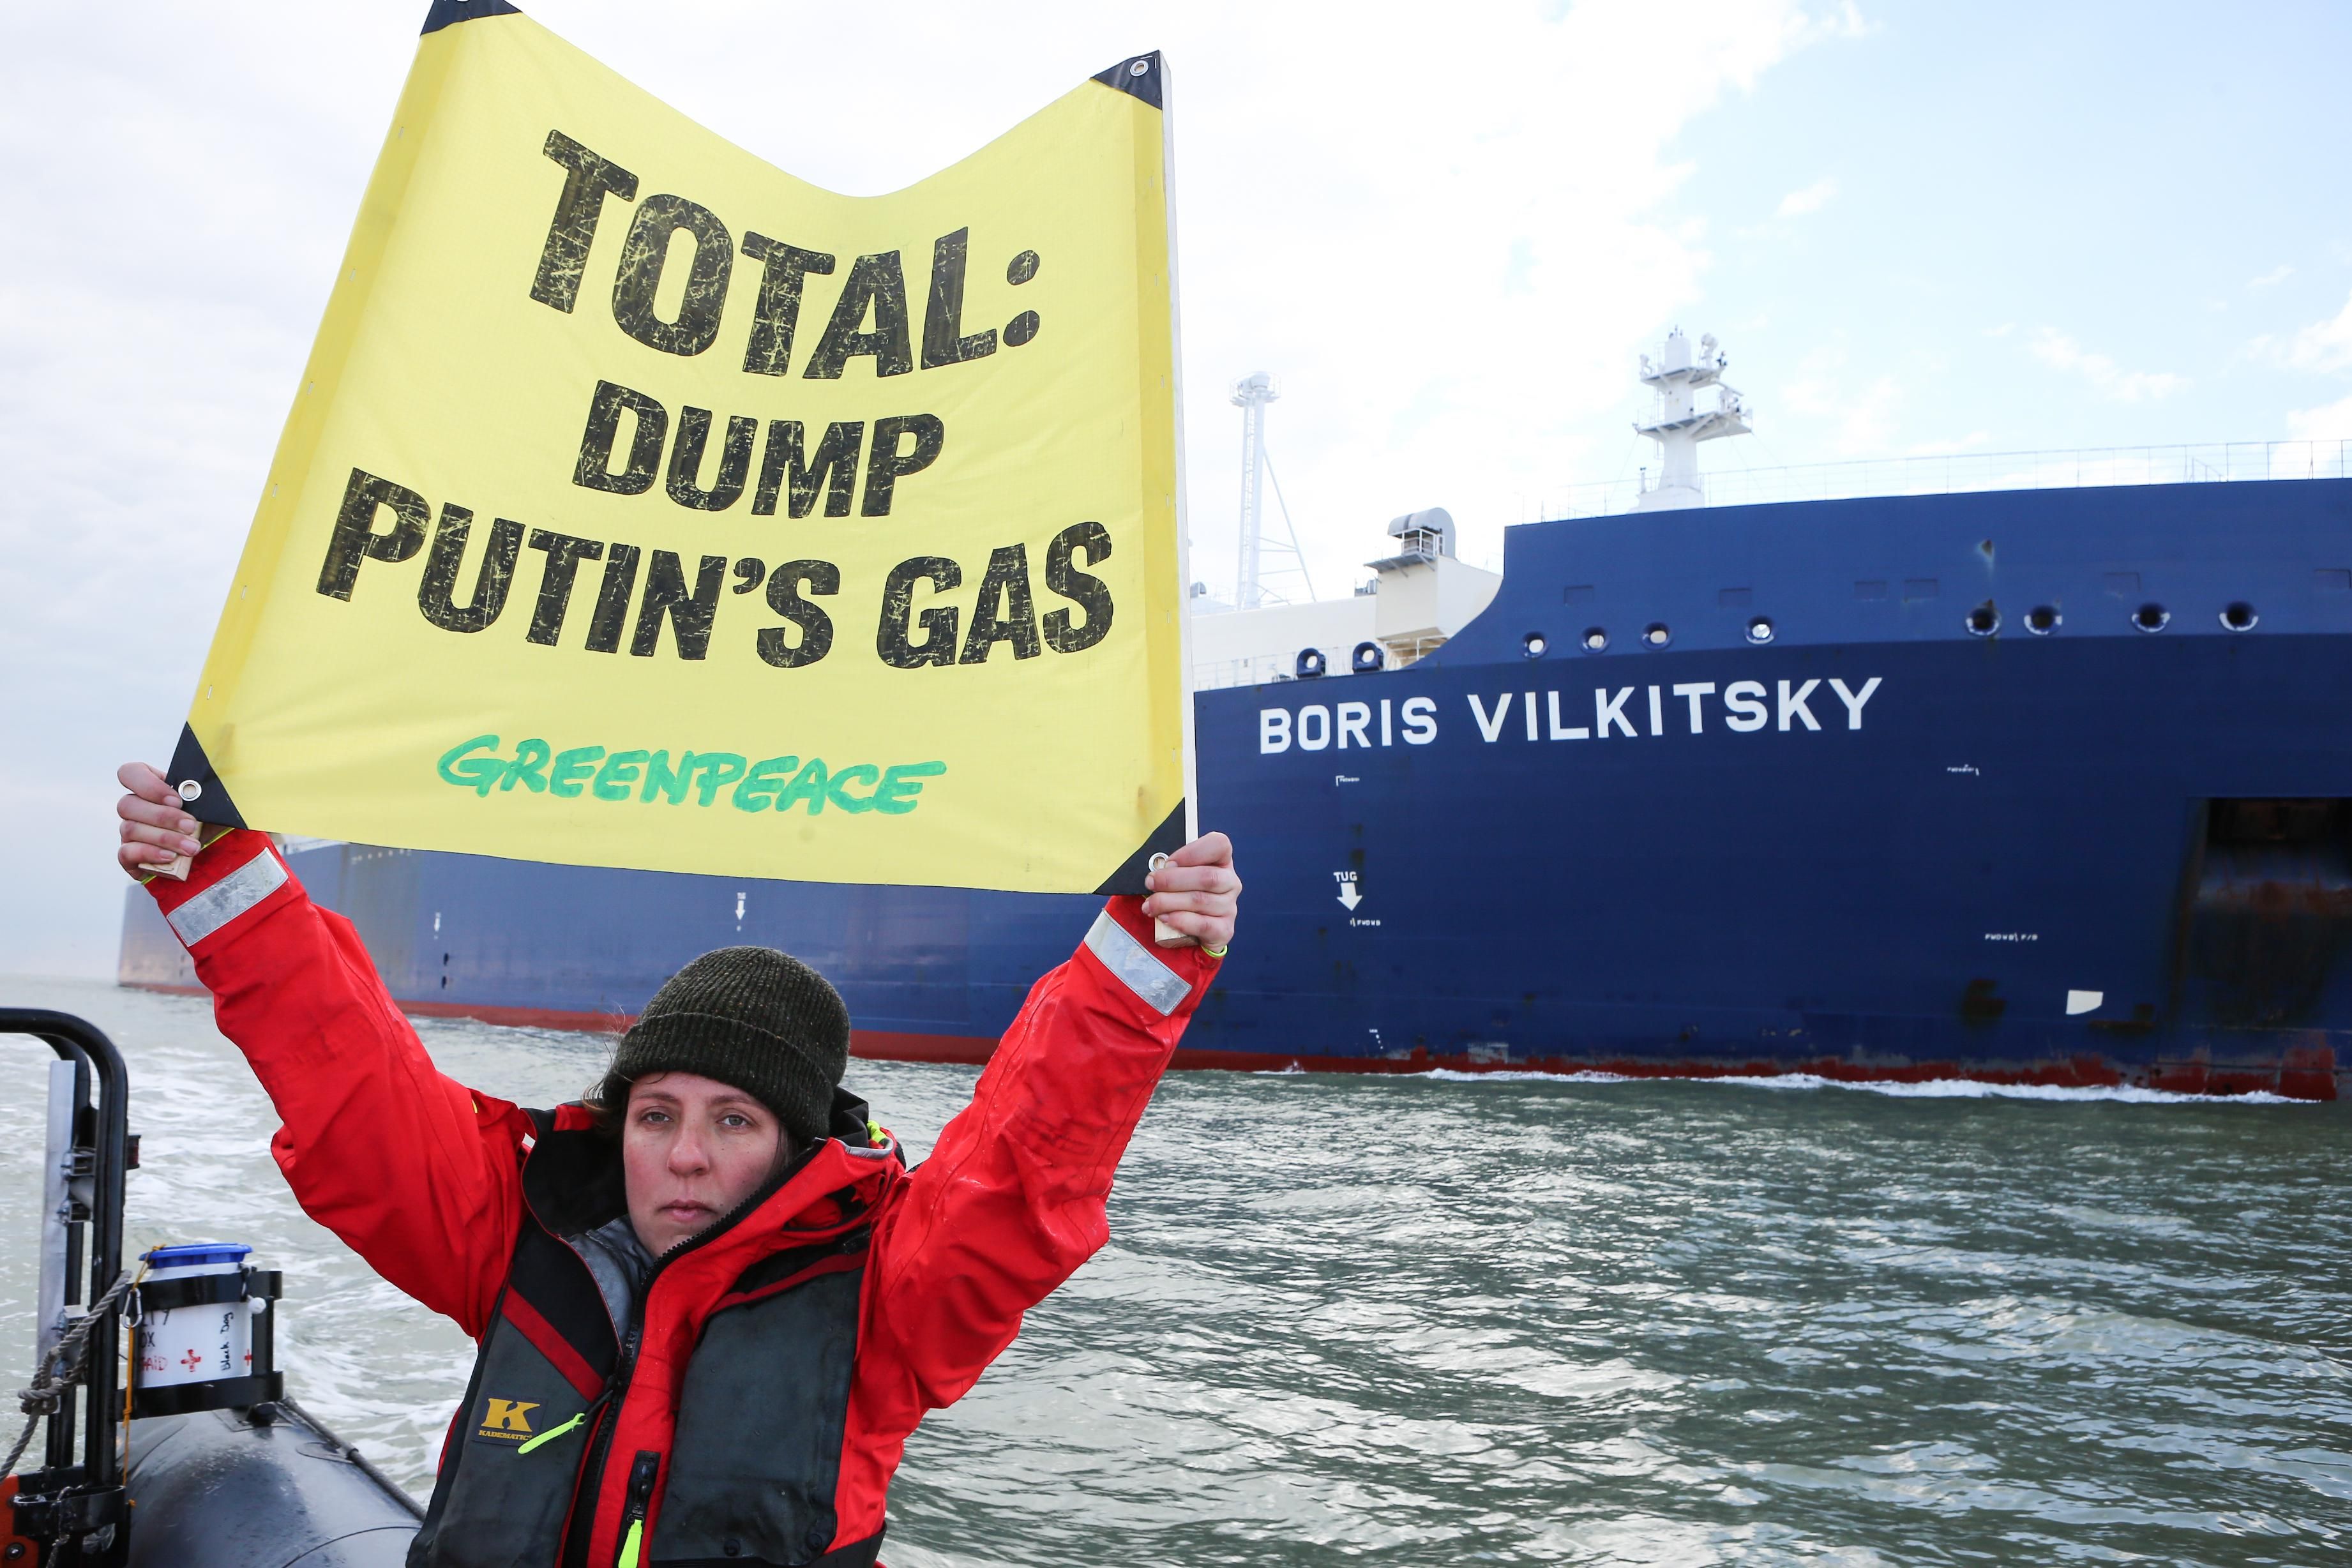 Total: Dump Putin's Gas